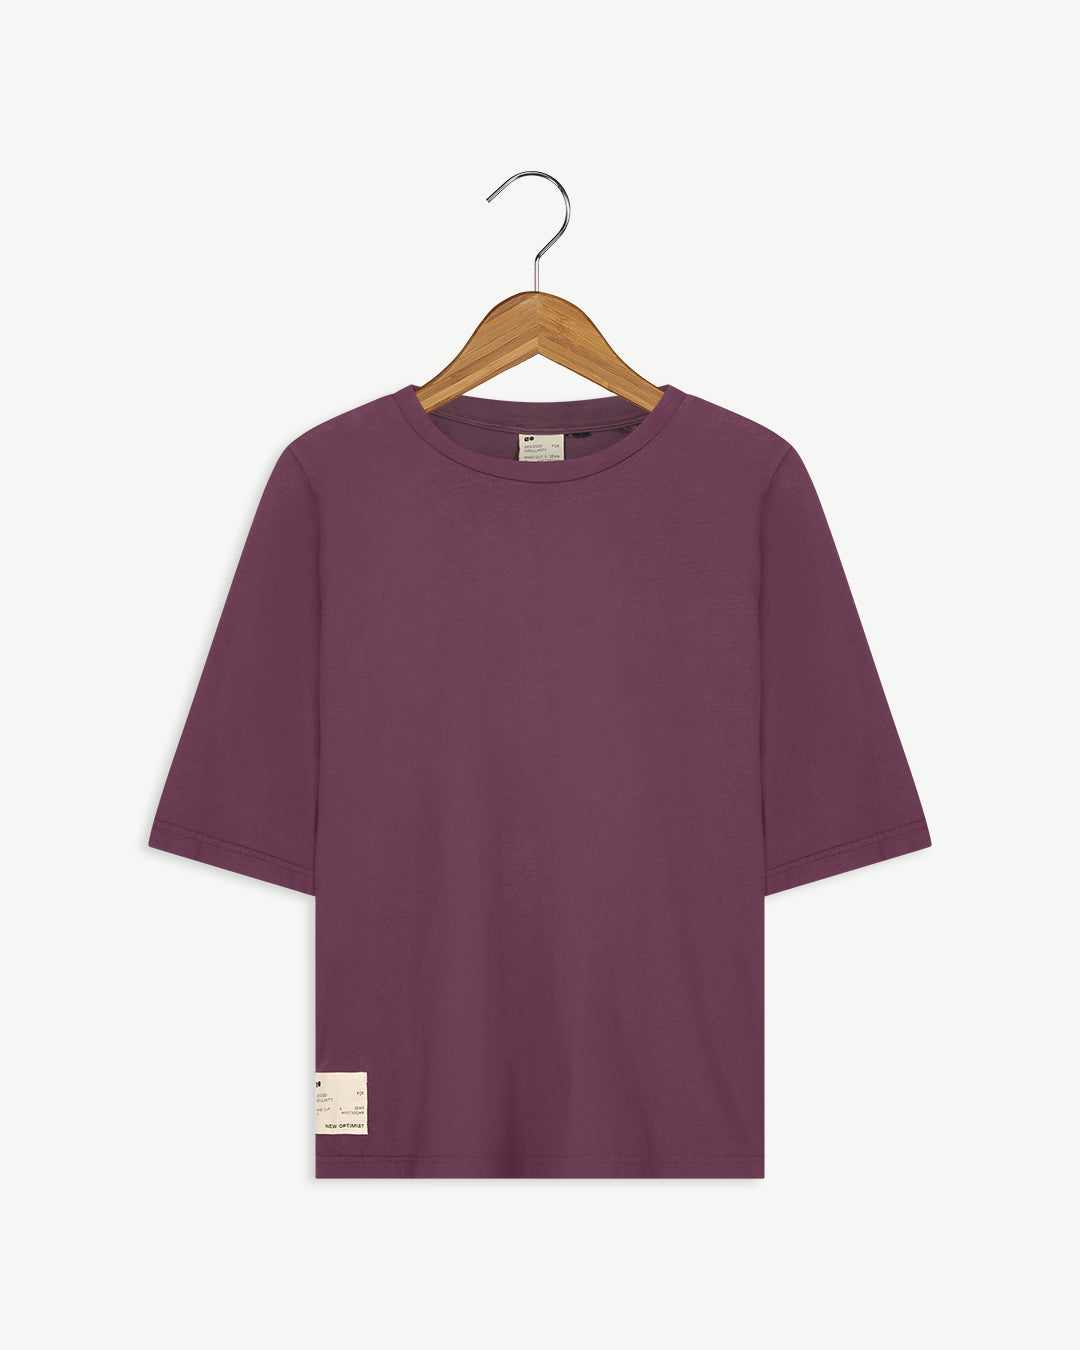 New Optimist womenswear Rondine T-shirt Prugna